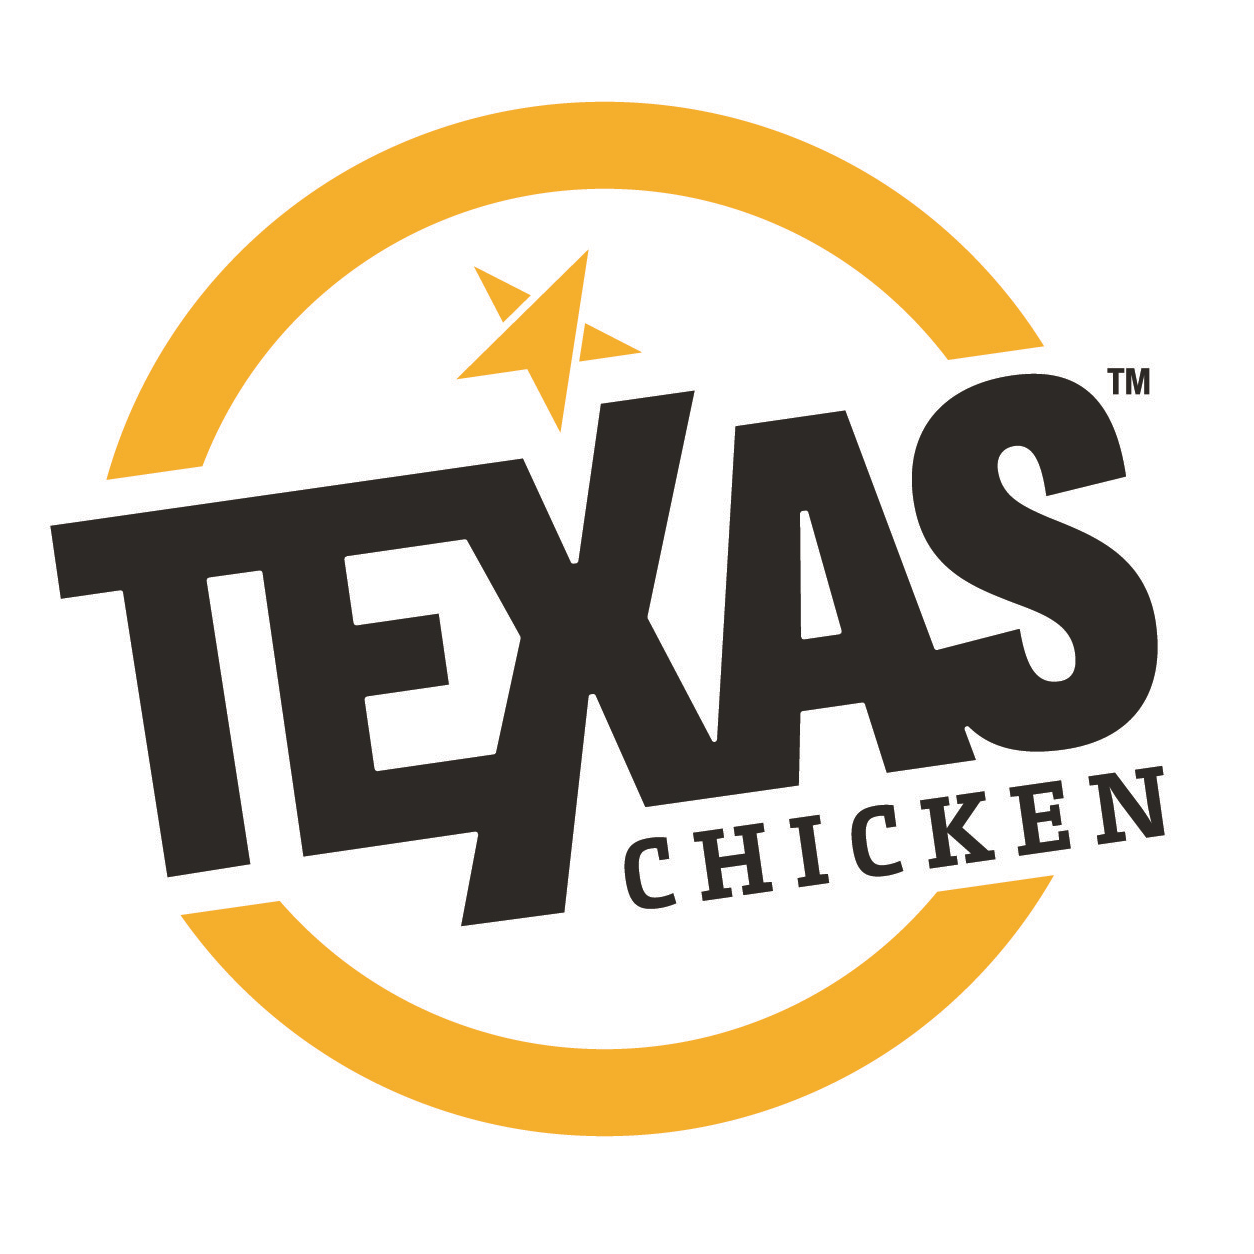 Texas Chicken (Resorts World Sentosa) - Dine, Shop, Earn